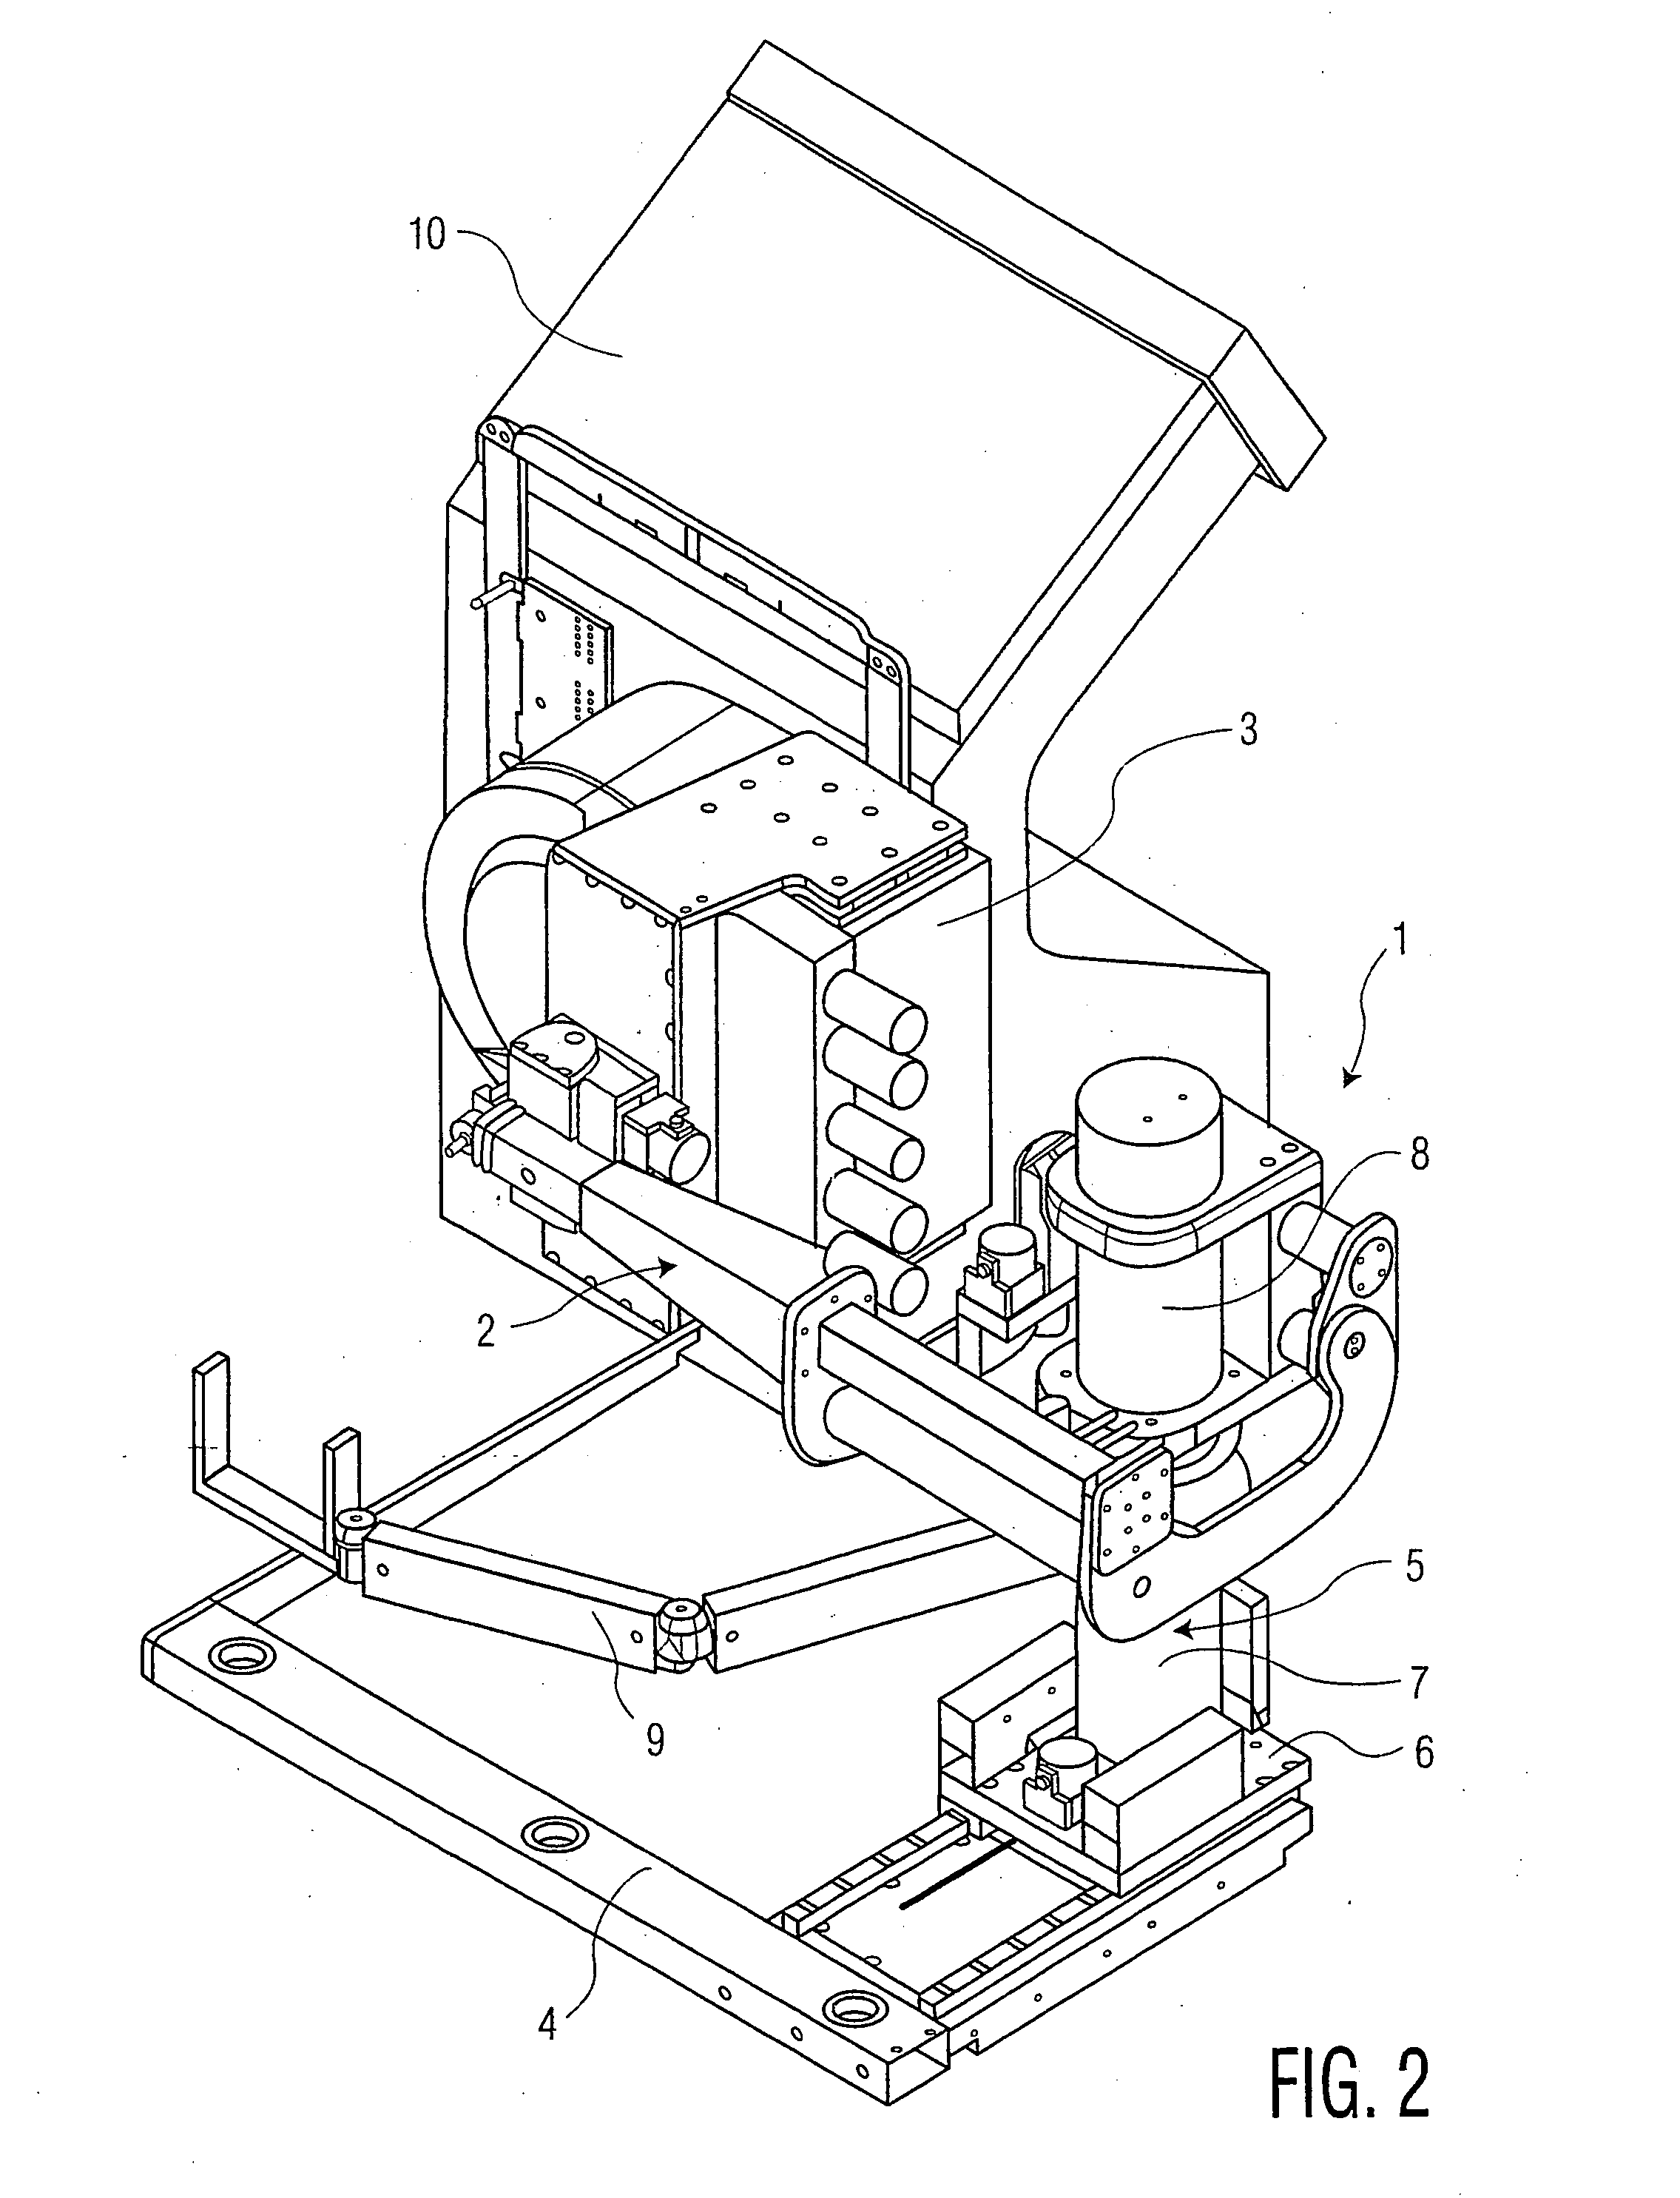 Test head positioning apparatus